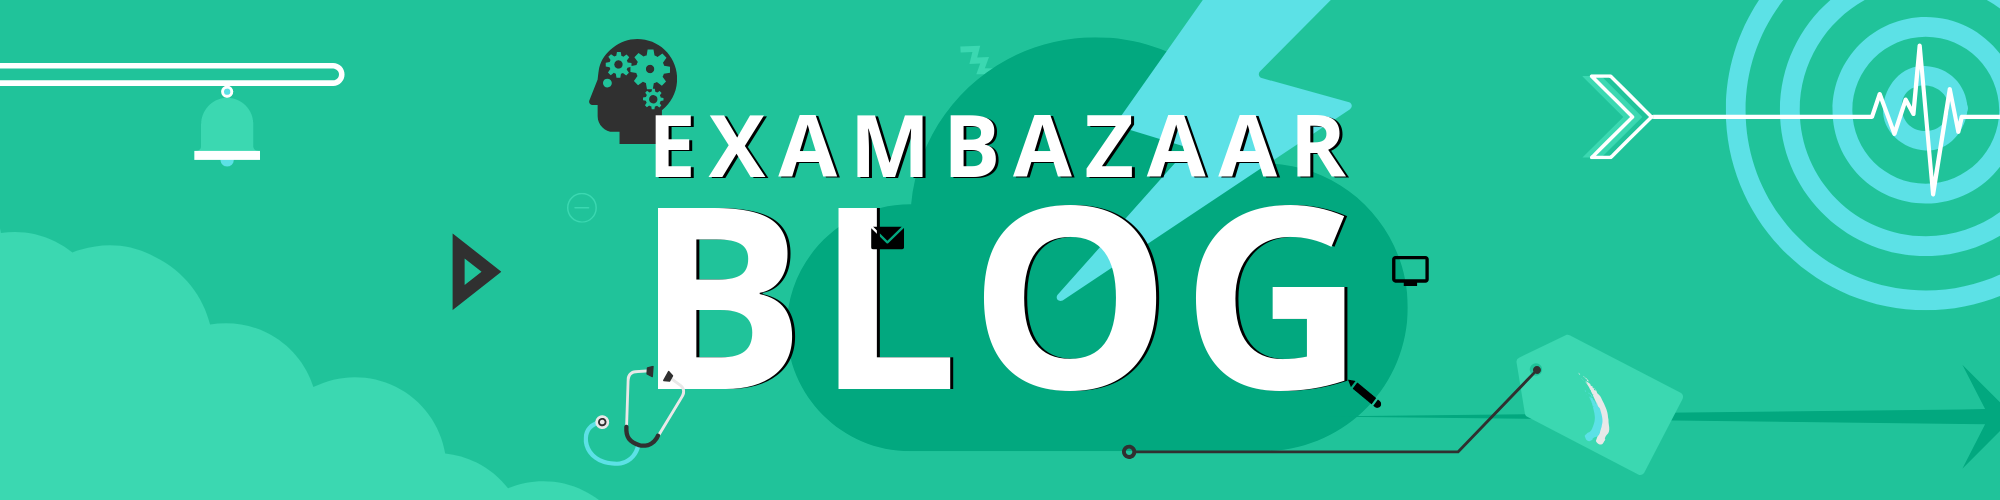 Exambazaar Blog Cover Photo